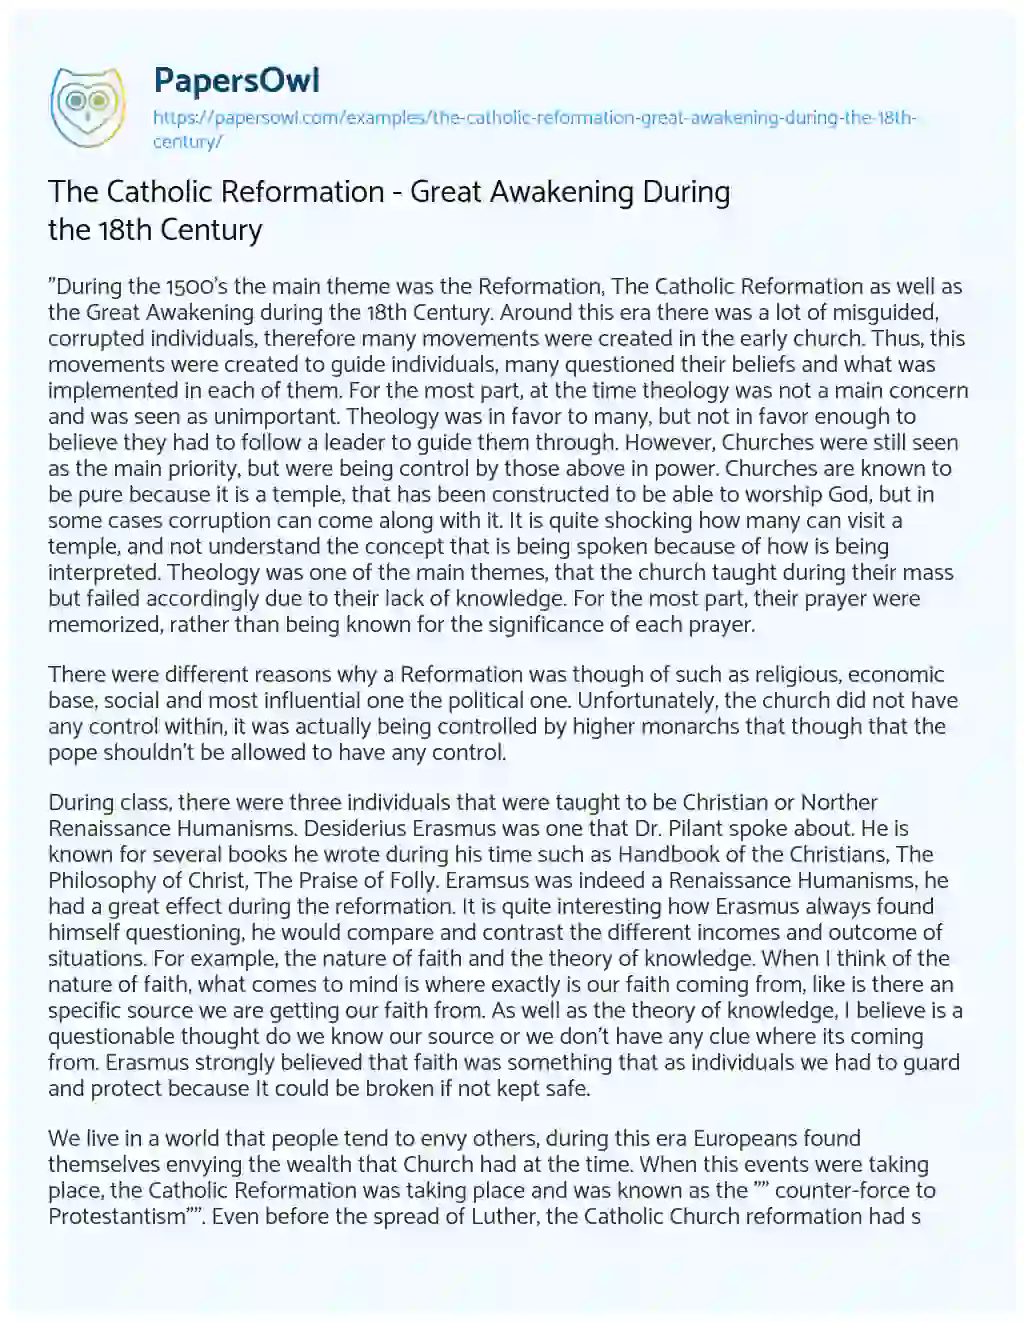 The Catholic Reformation – Great Awakening during the 18th Century essay